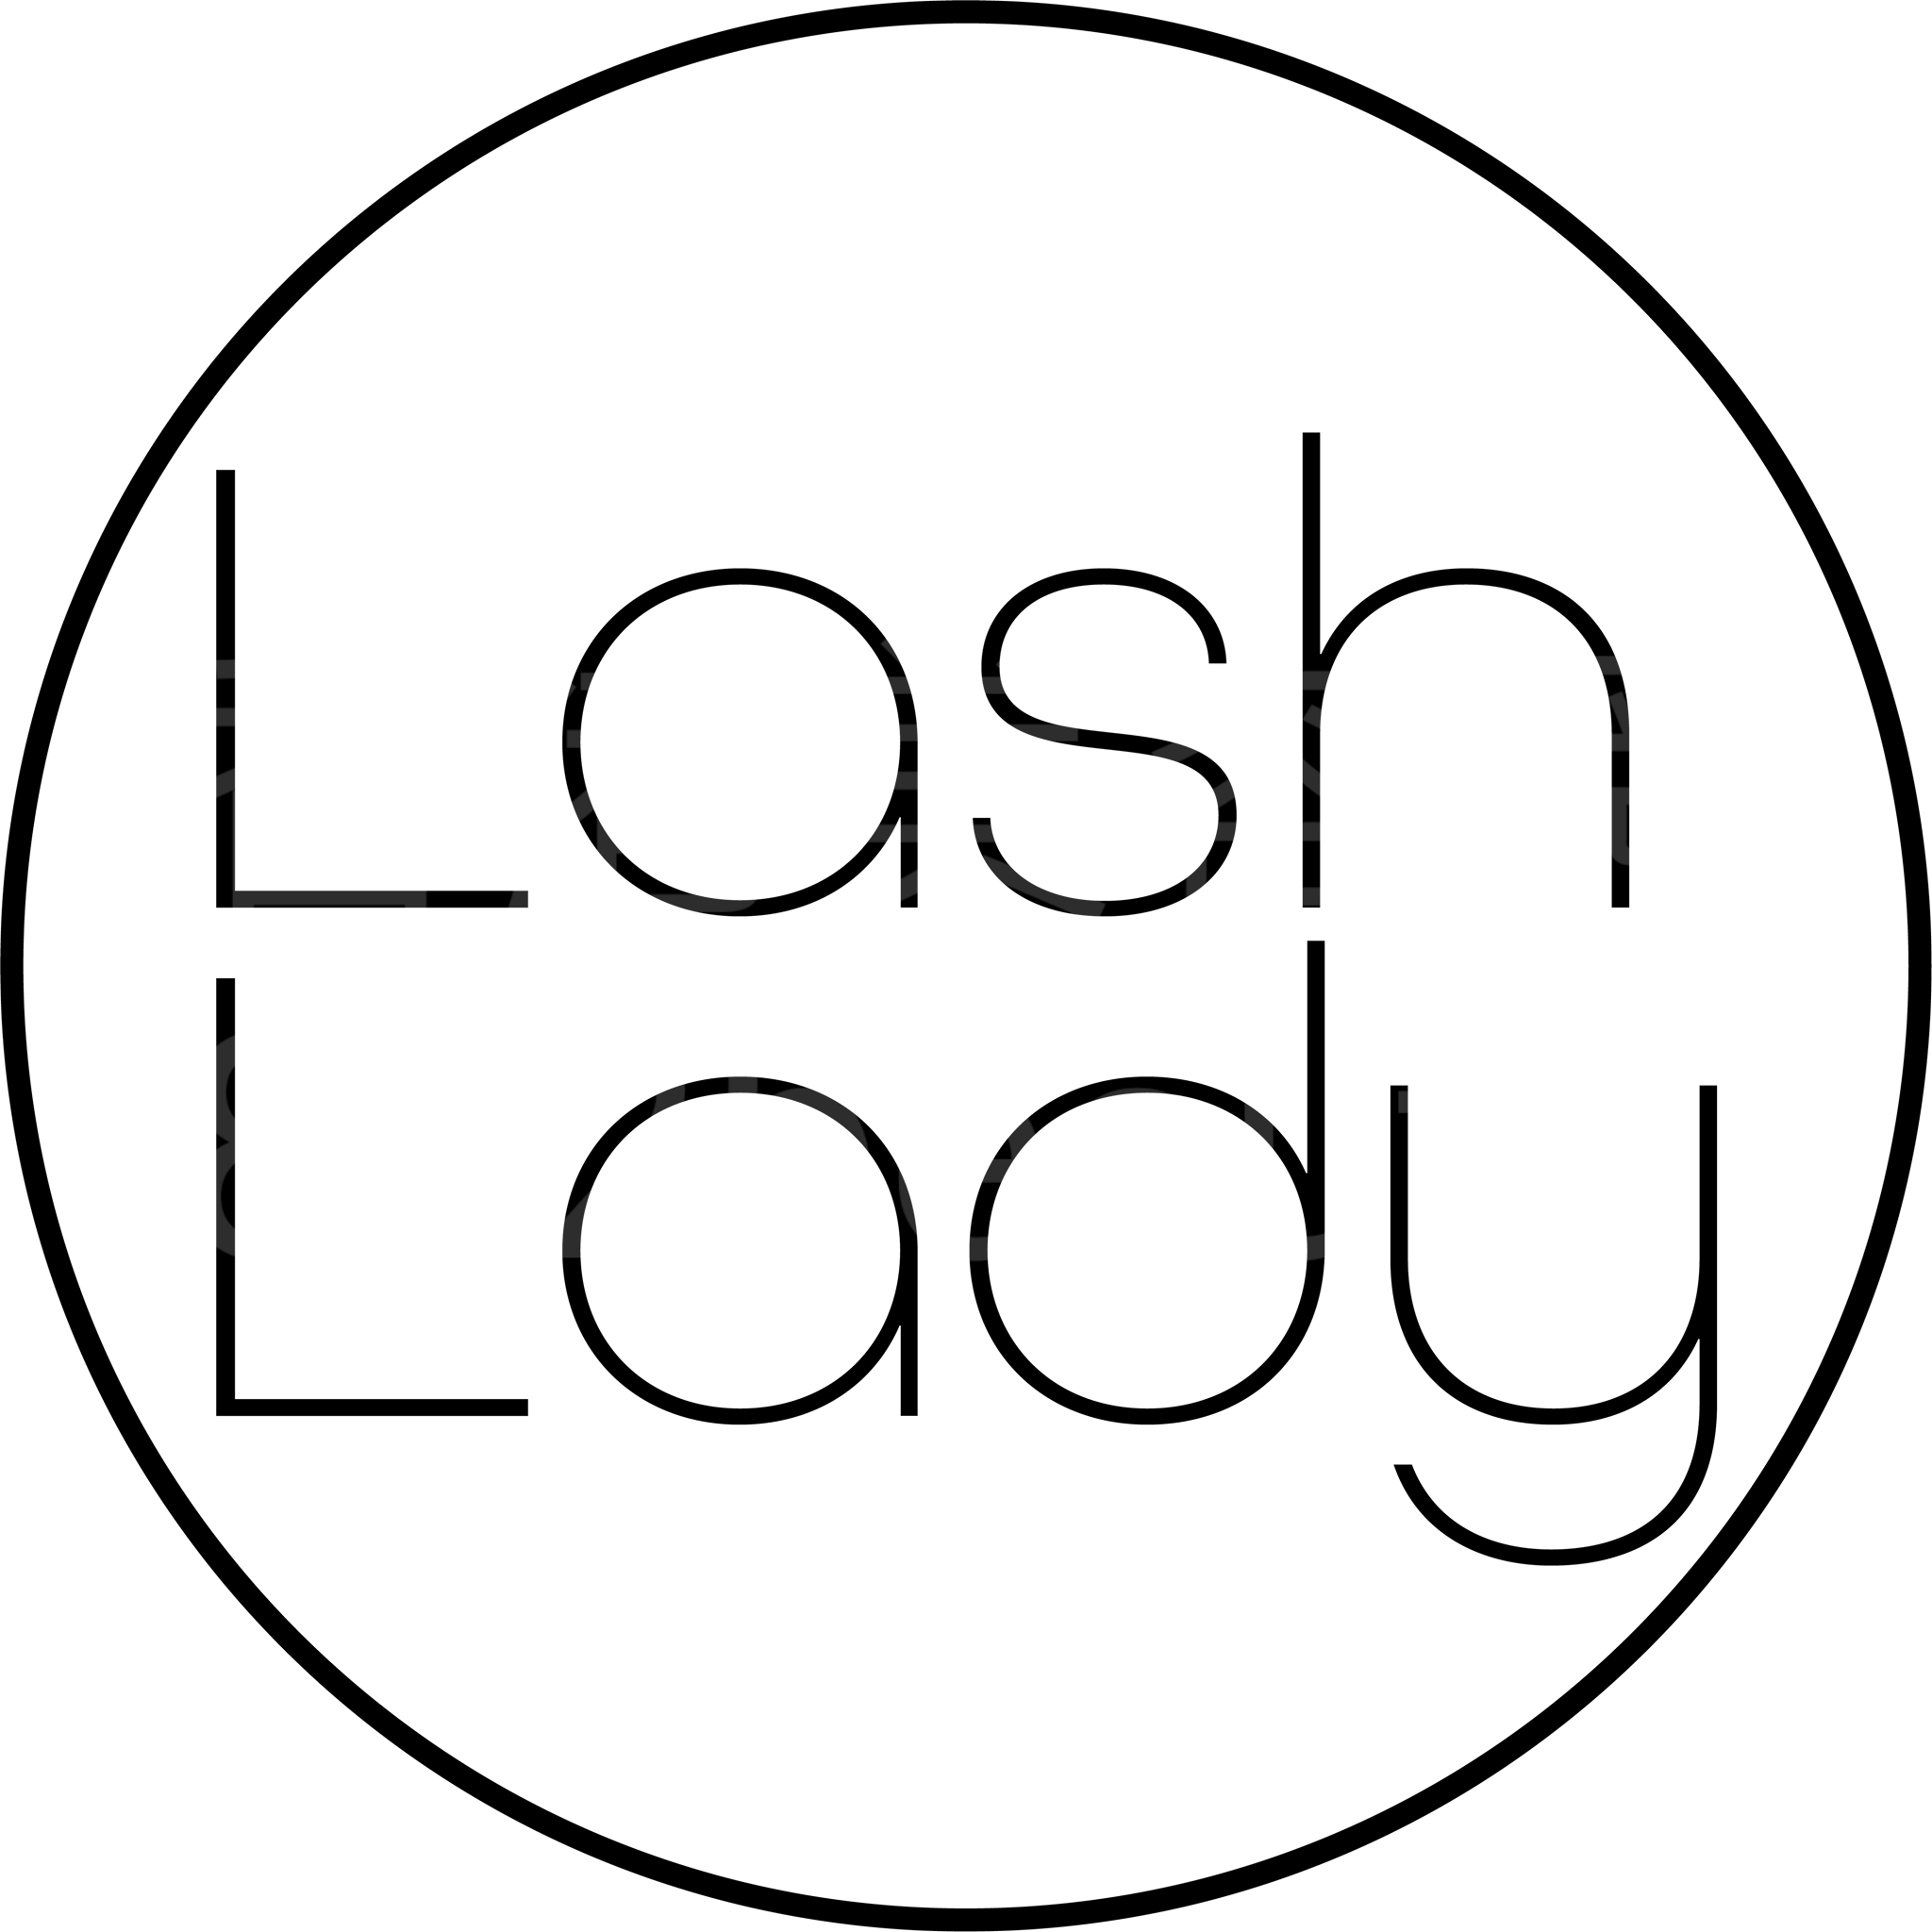 美容院: Lash Lady